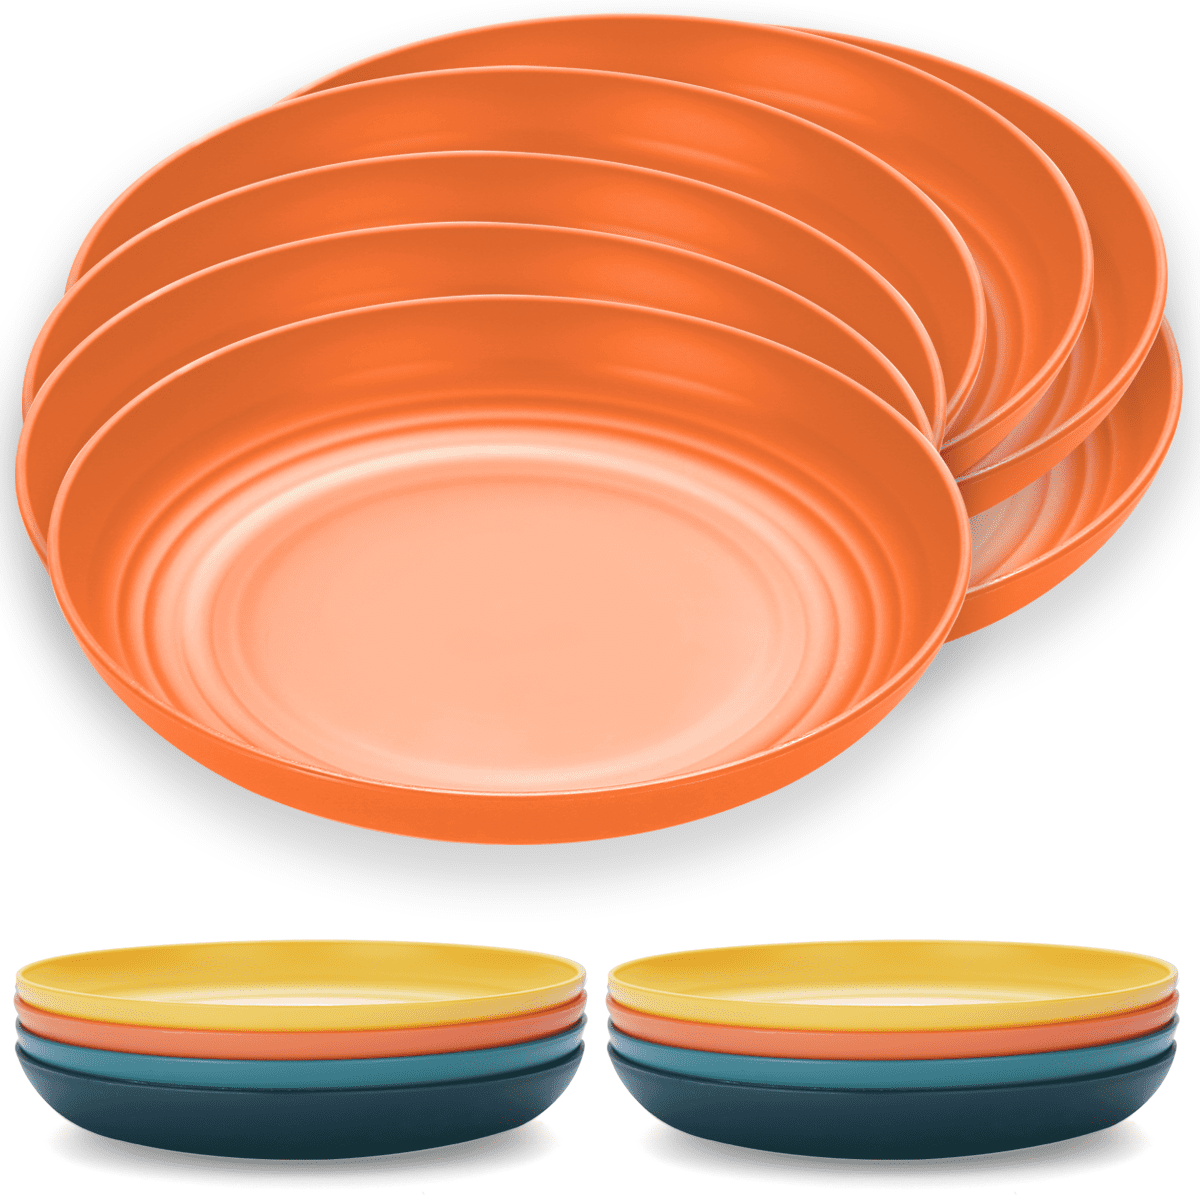 US$ 18.99 - 9 Inch Orange Deep Plastic Plates 8 Pieces